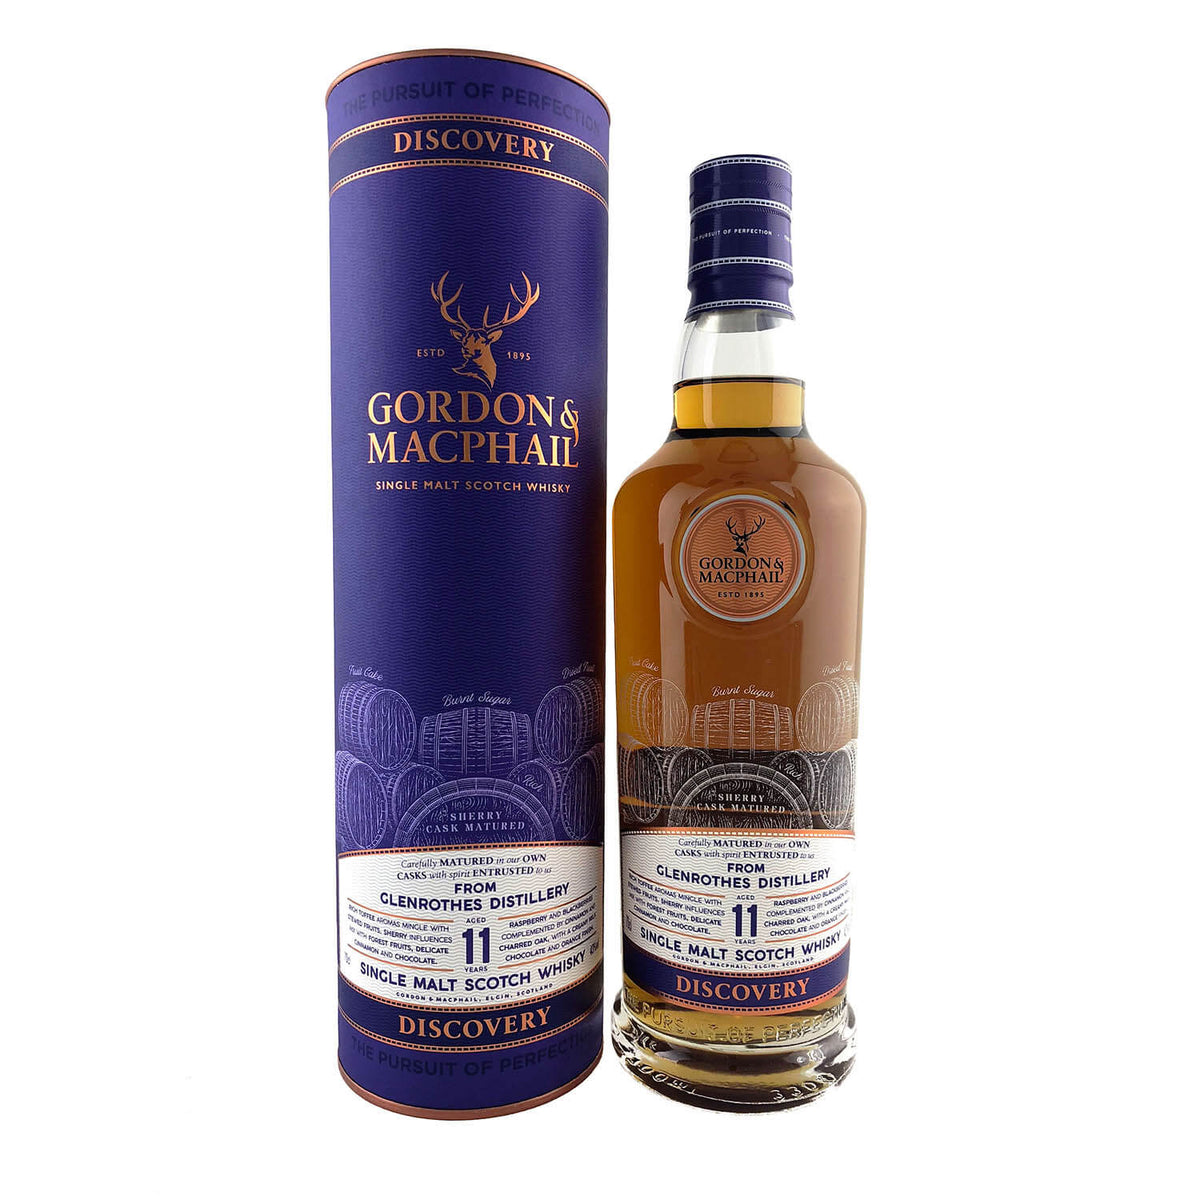 Gordon & Macphail Discovery Glenrothes Distillery 11 Year Old Single Malt Scotch Whisky 700ml